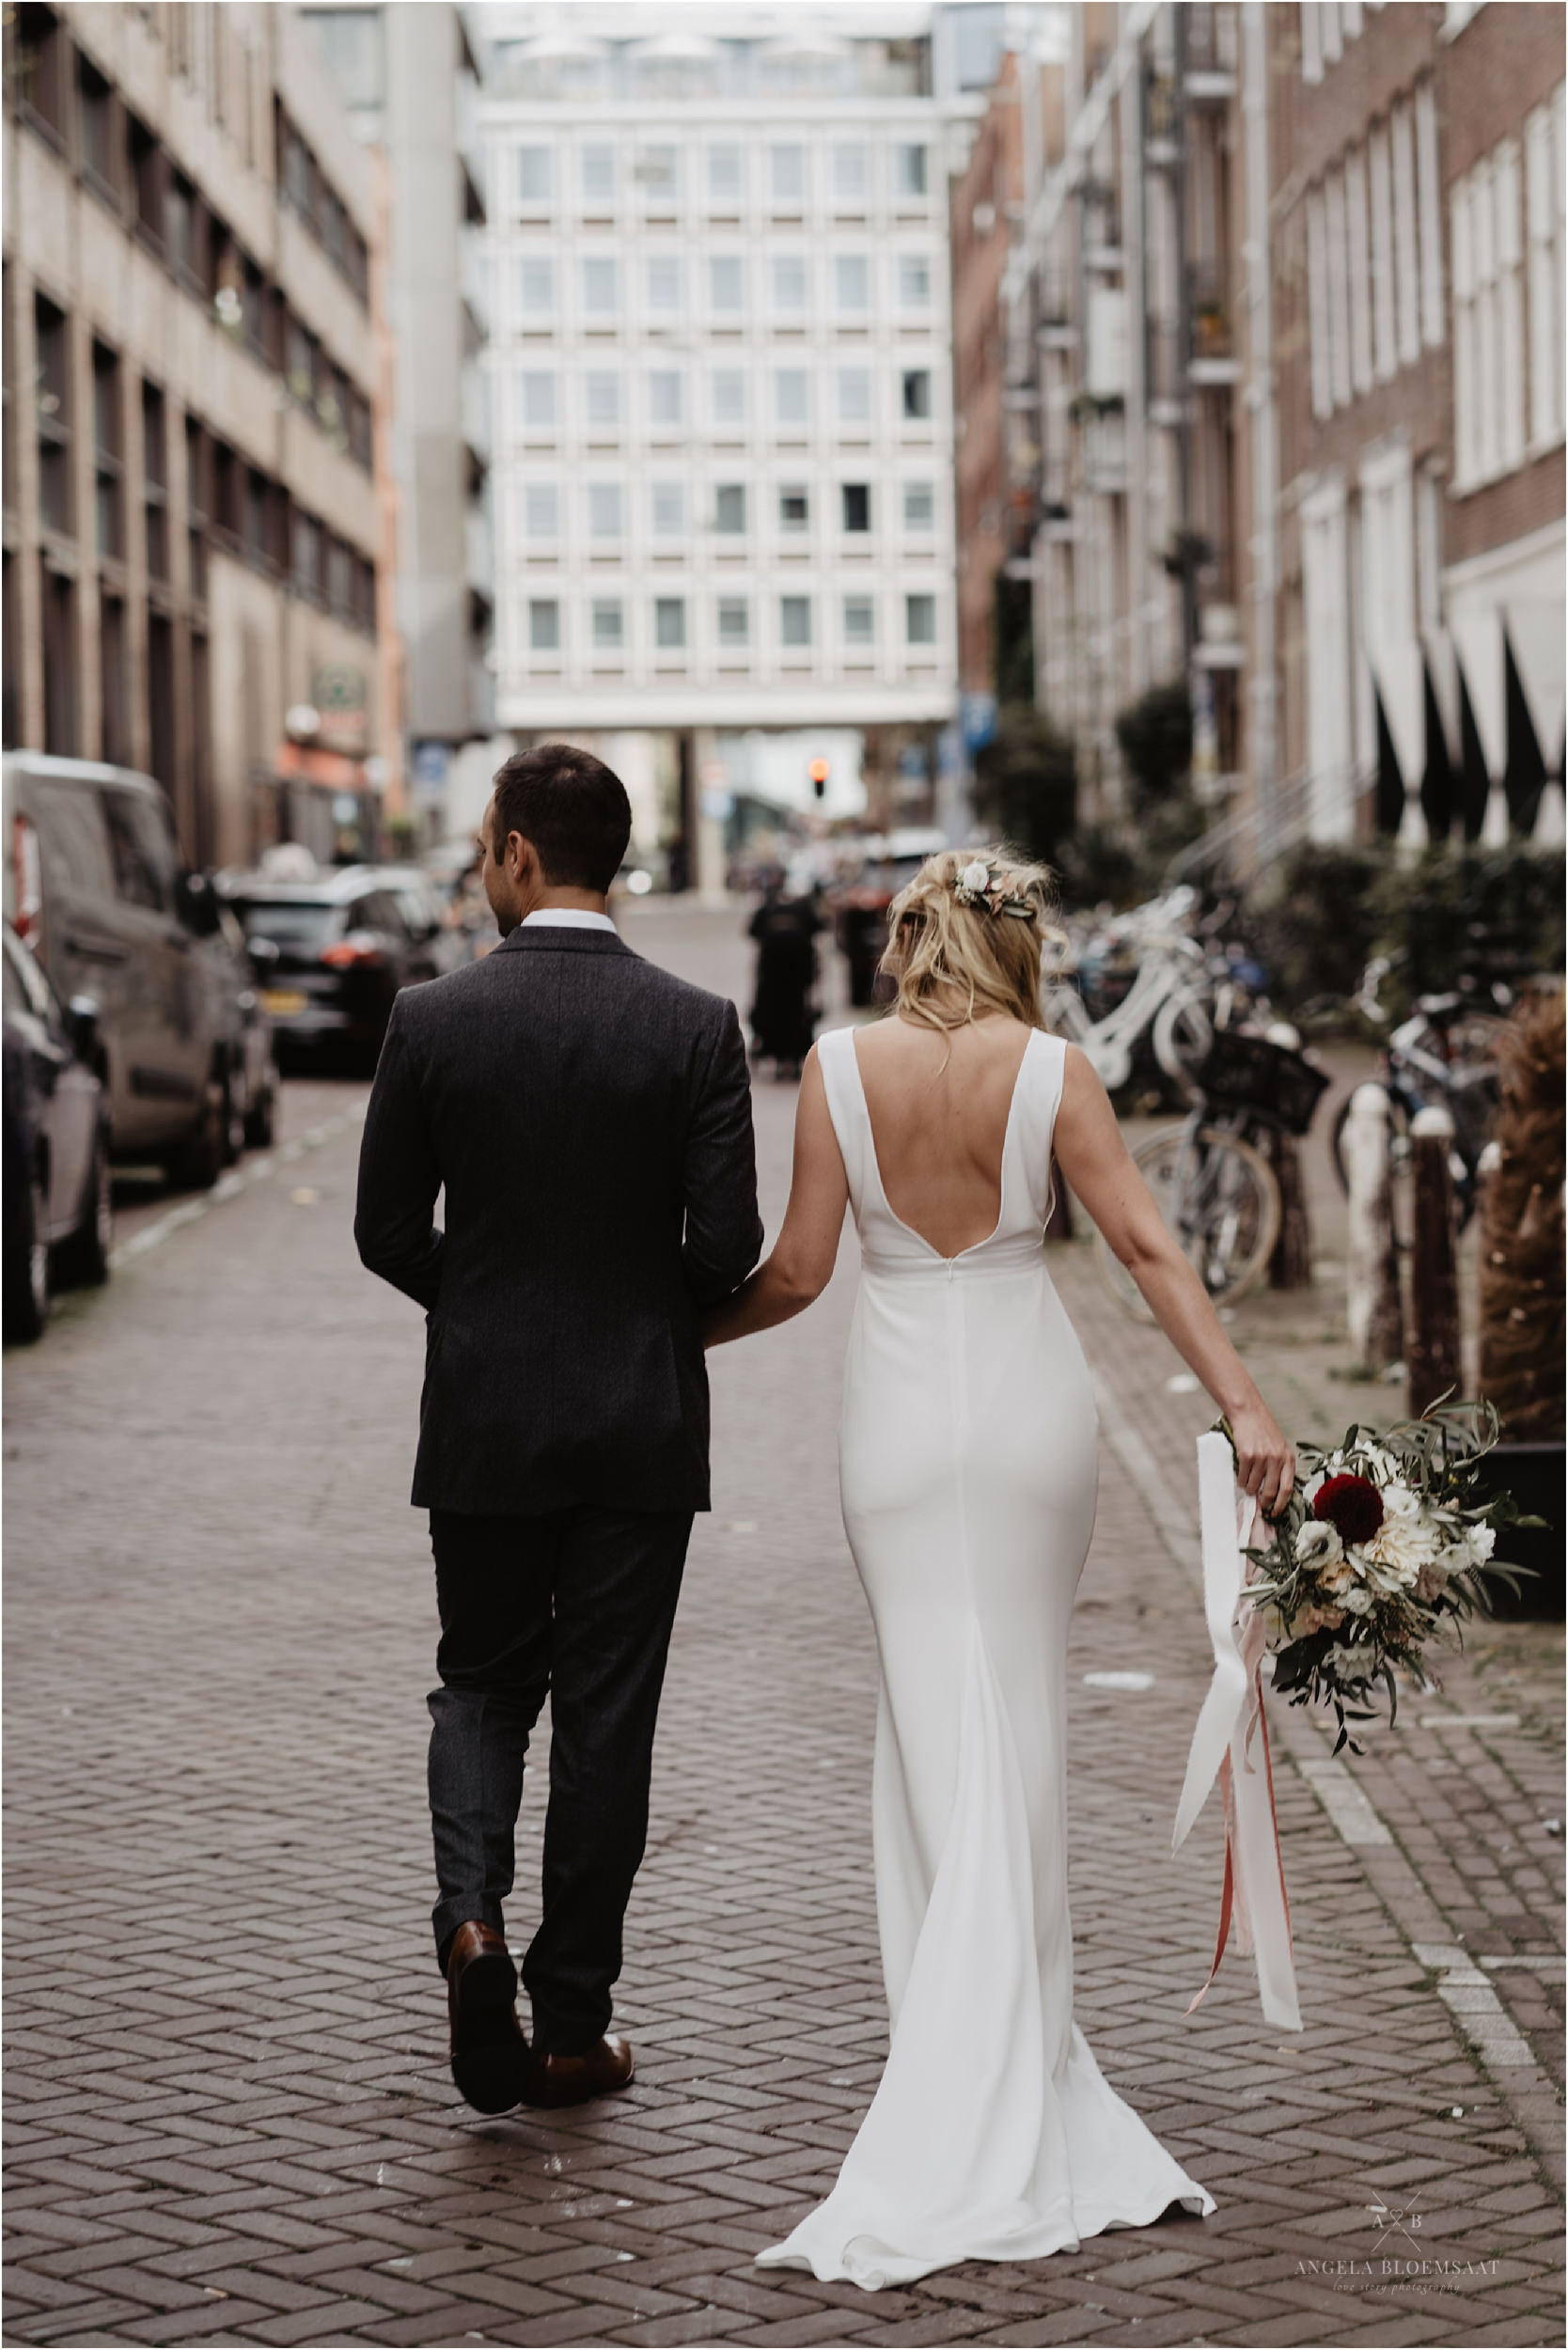 Wedding photographer Amsterdam Netherlands - bruiloft trouwen fotograaf - Angela Bloemsaat Love Story Photography